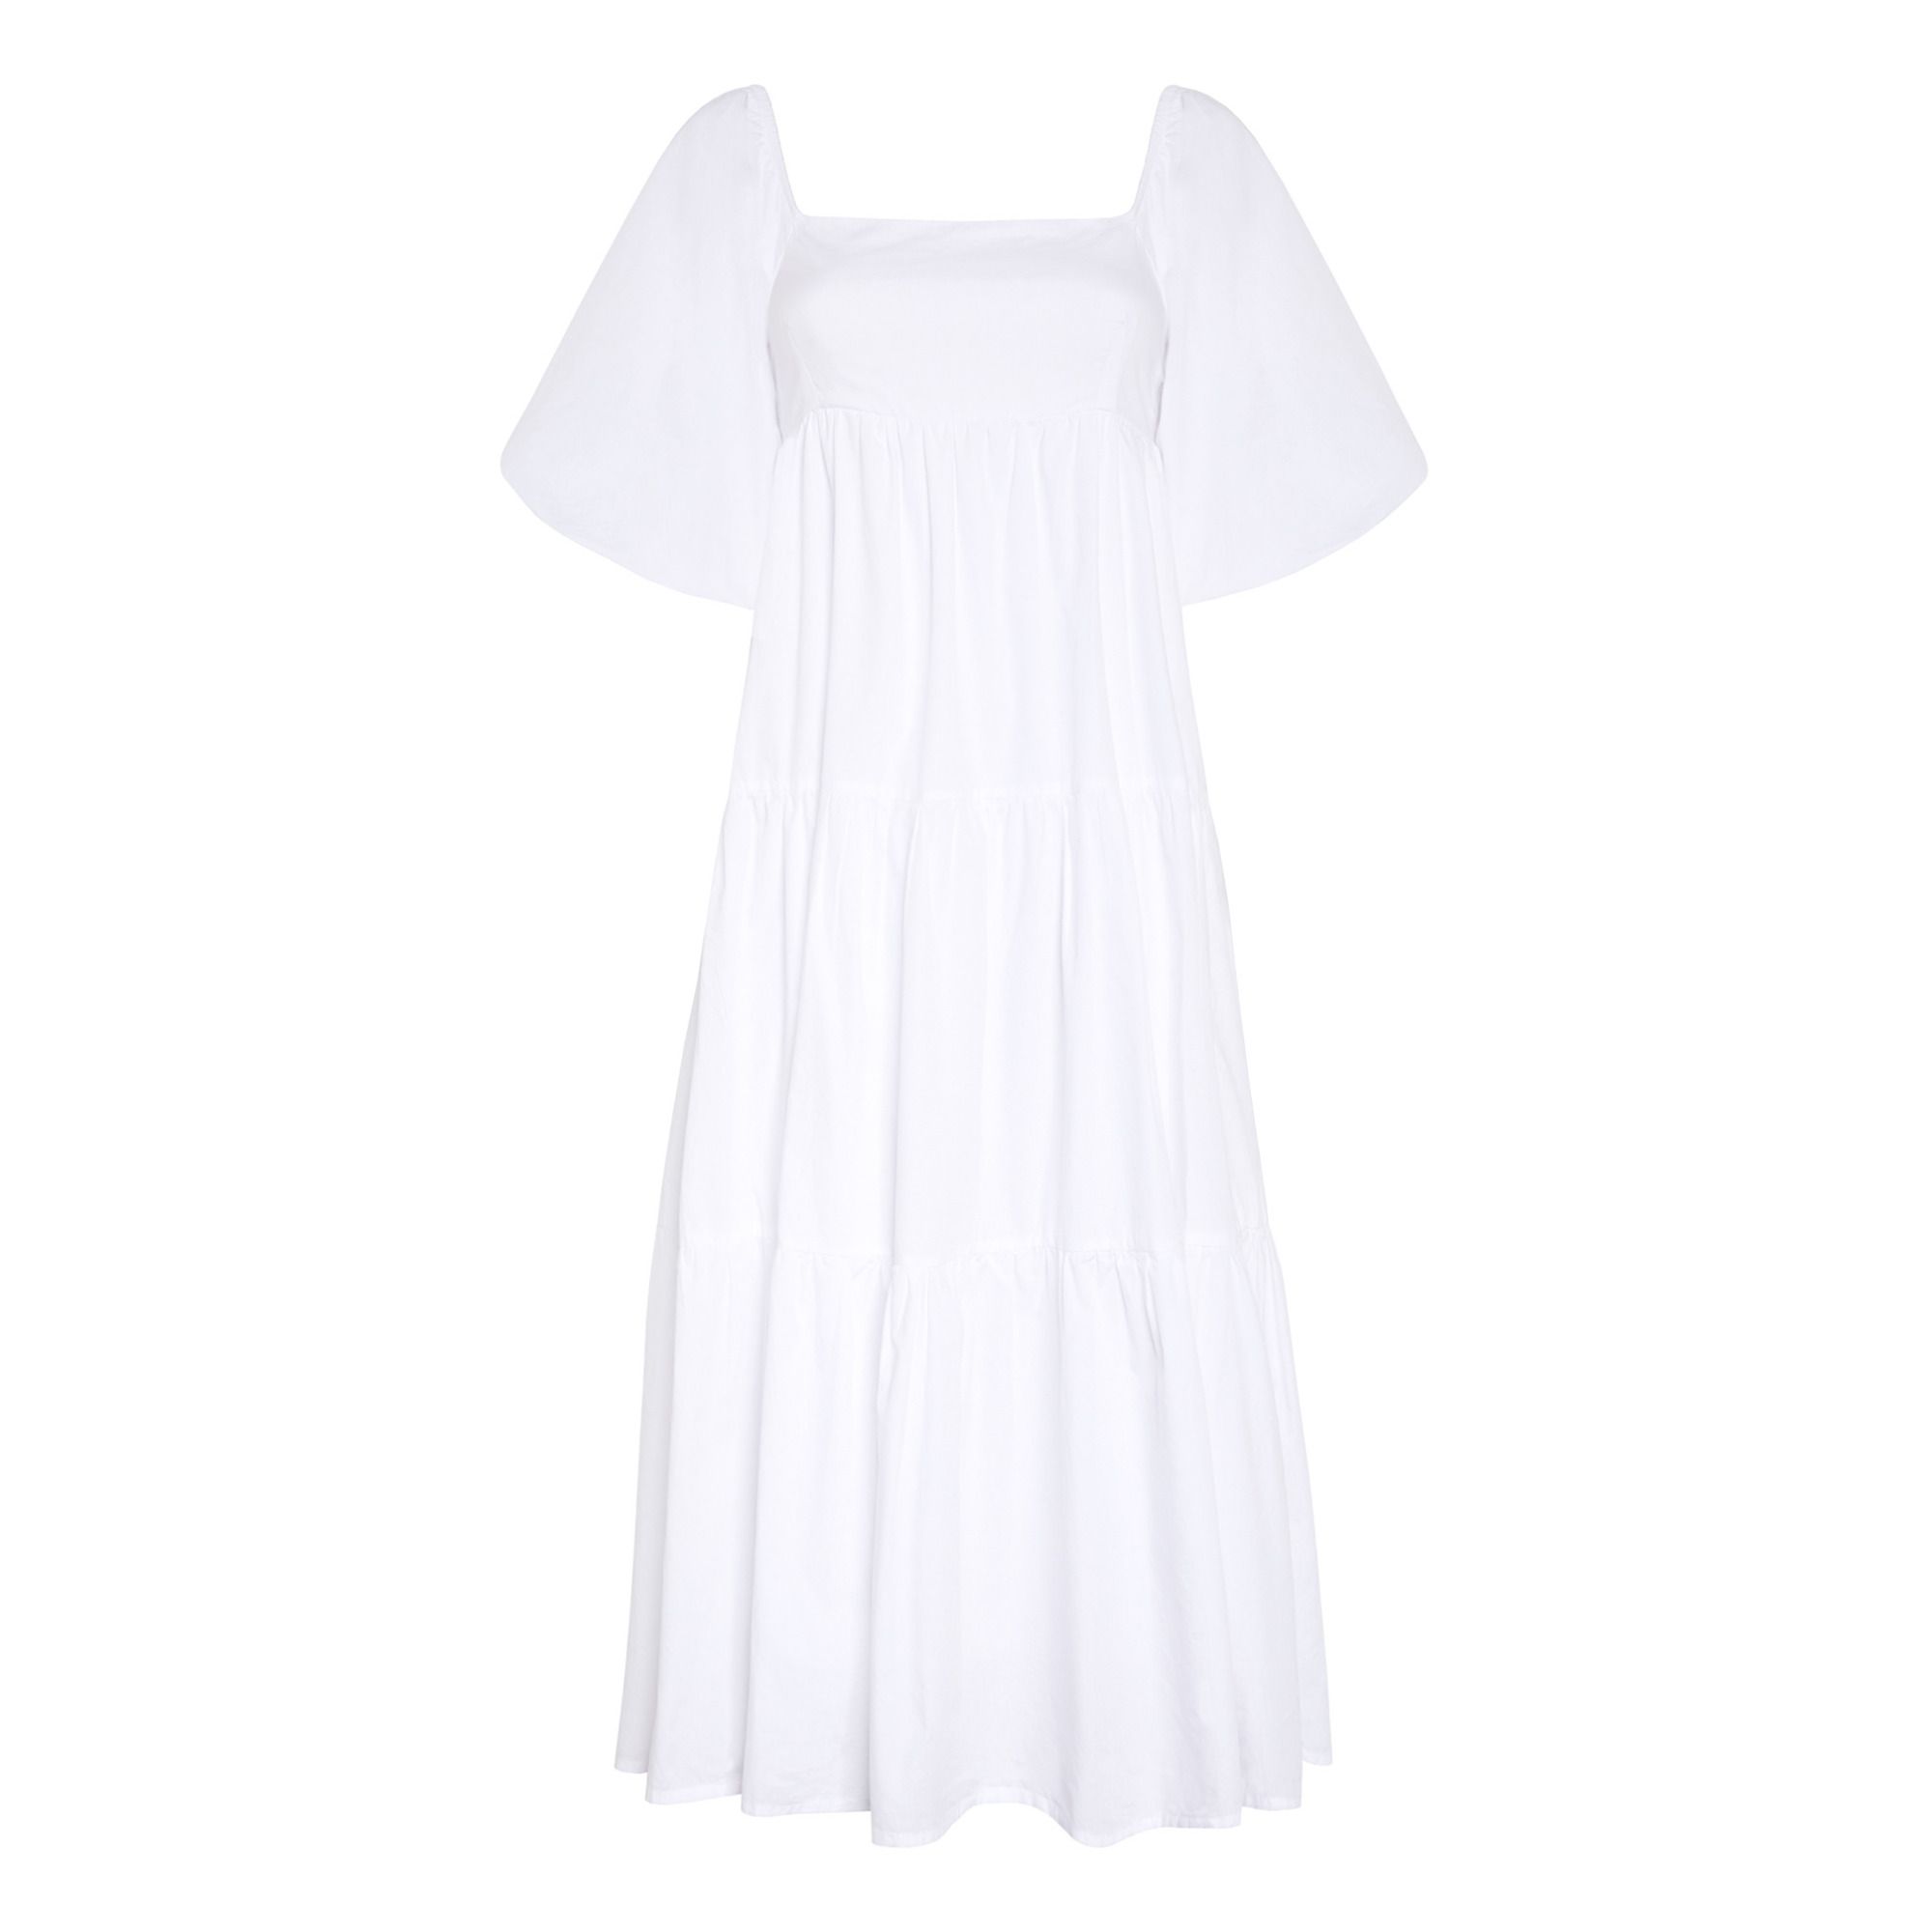 Kiona Dress White Faithfull the Brand Fashion Adult